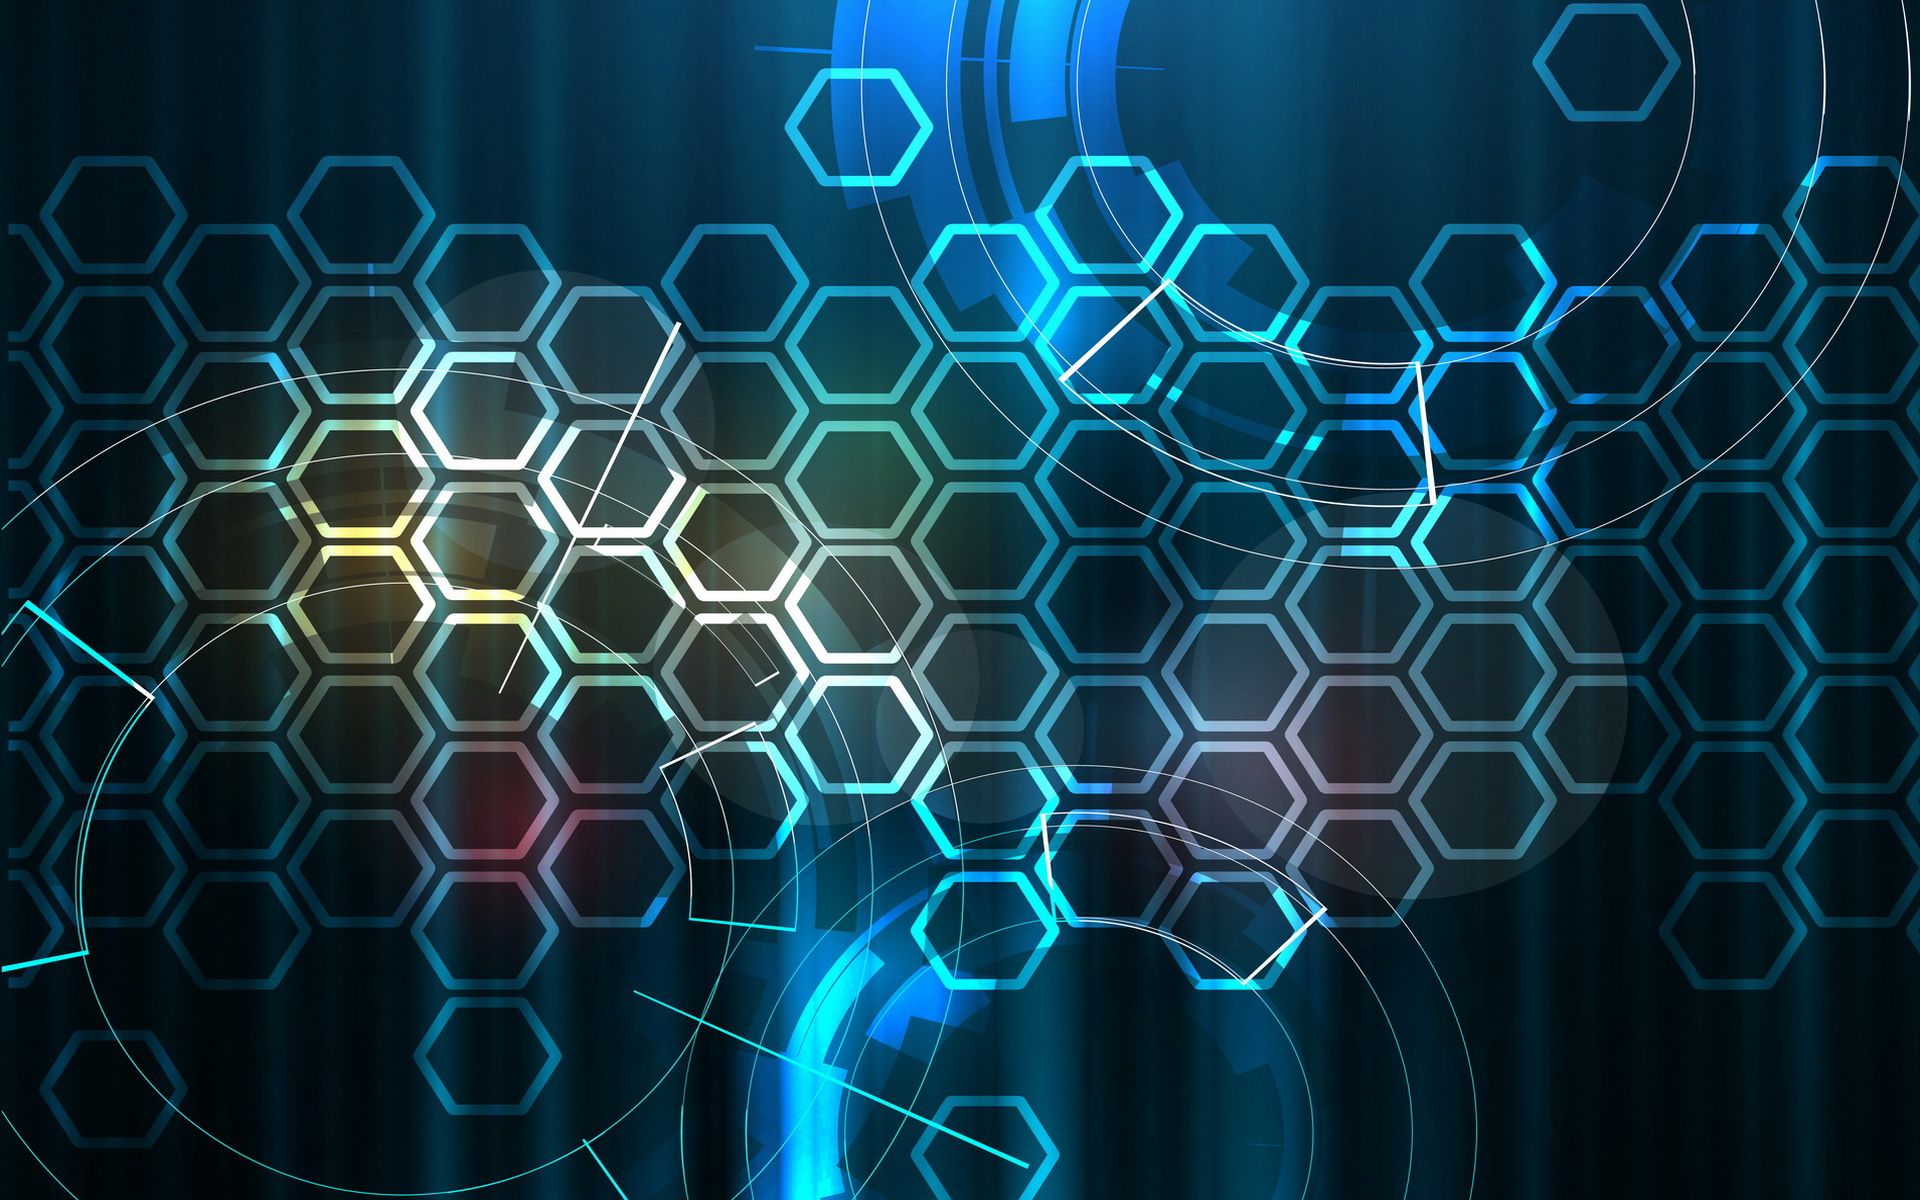 Hexagon Wallpaper 1080p Perspective by zTryce on DeviantArt